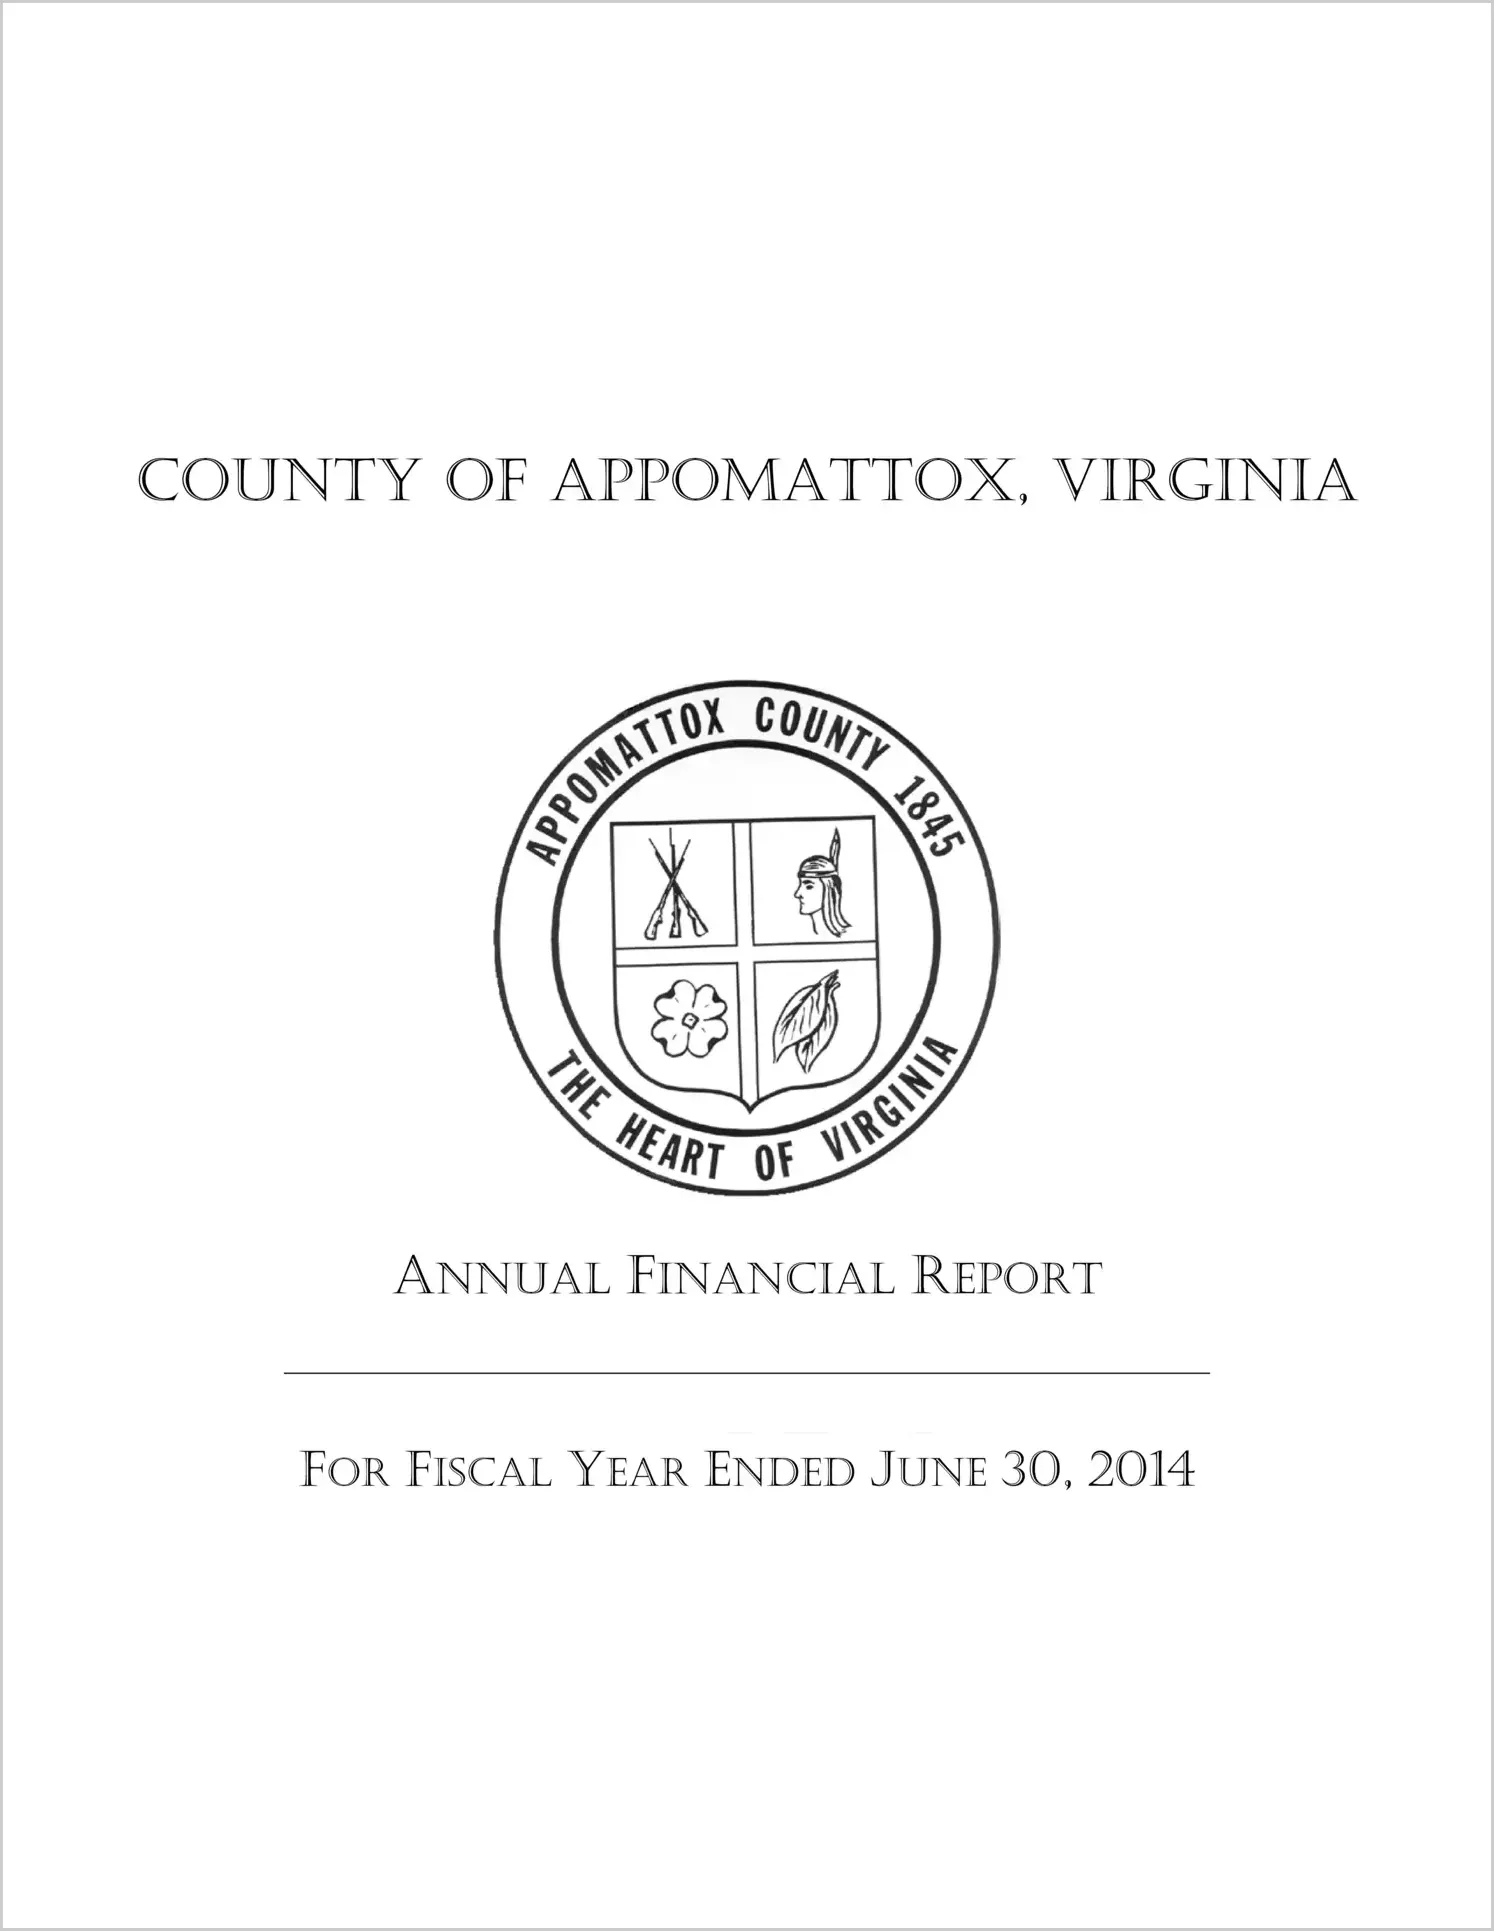 2014 Annual Financial Report for County of Appomattox